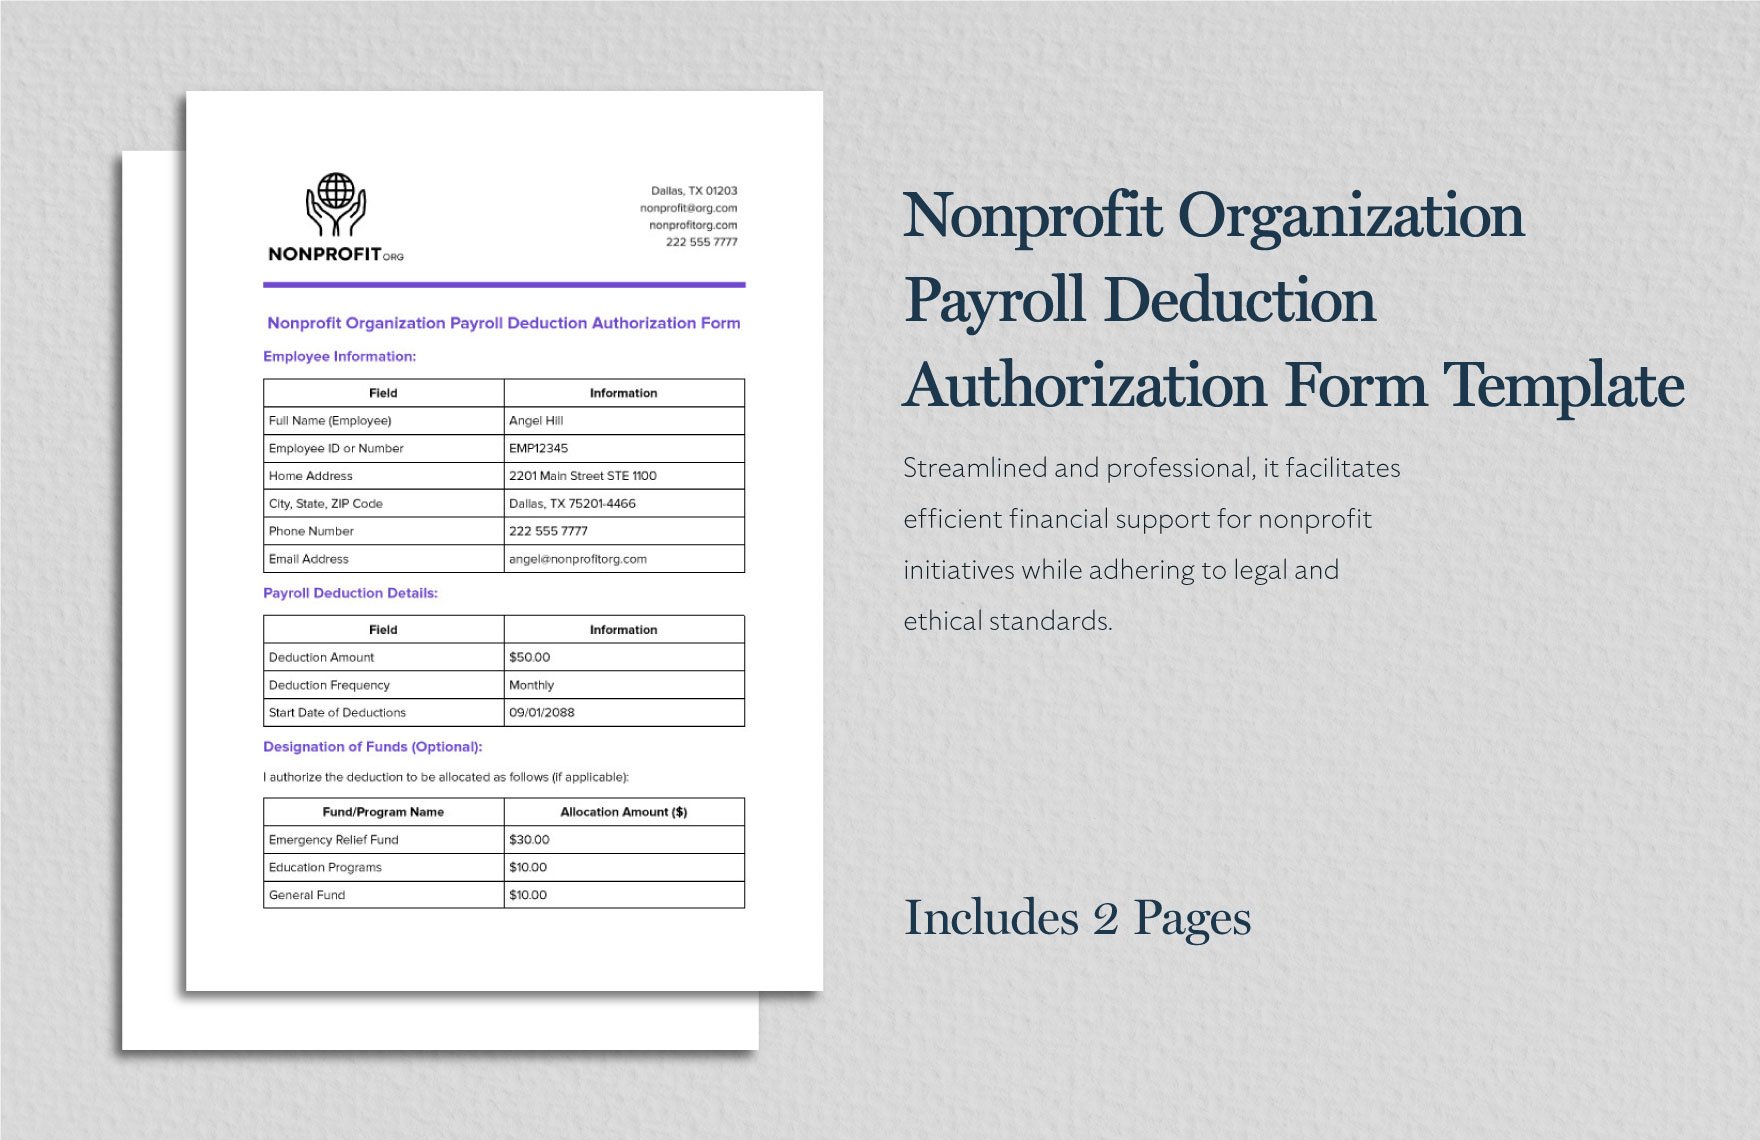 Nonprofit Organization Payroll Deduction Authorization Form Template